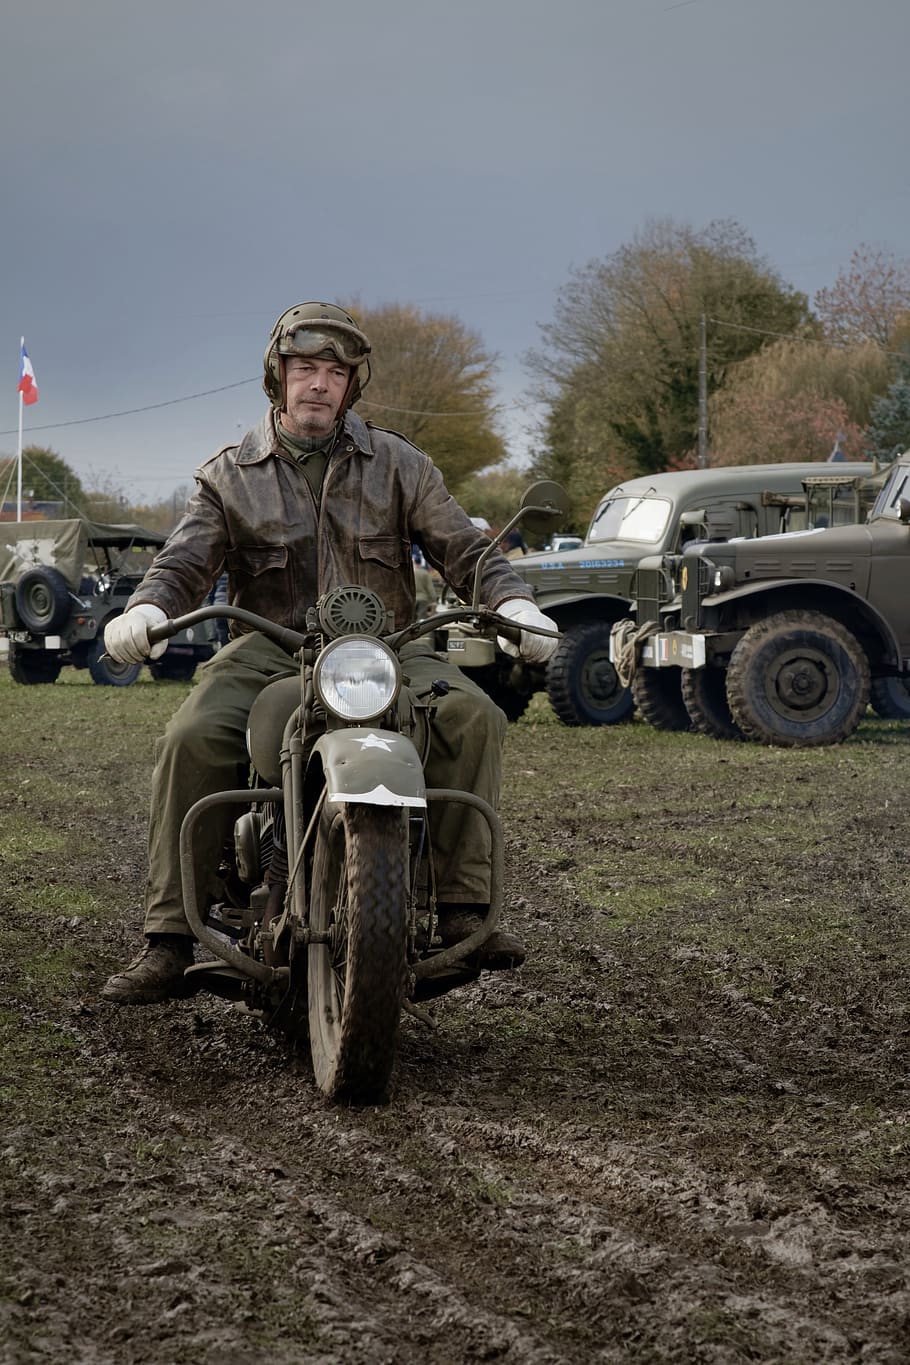 second world war, war, ww2, motorcycle, harley davidson, memory, vehicle, khaki, uniform, mode of transportation